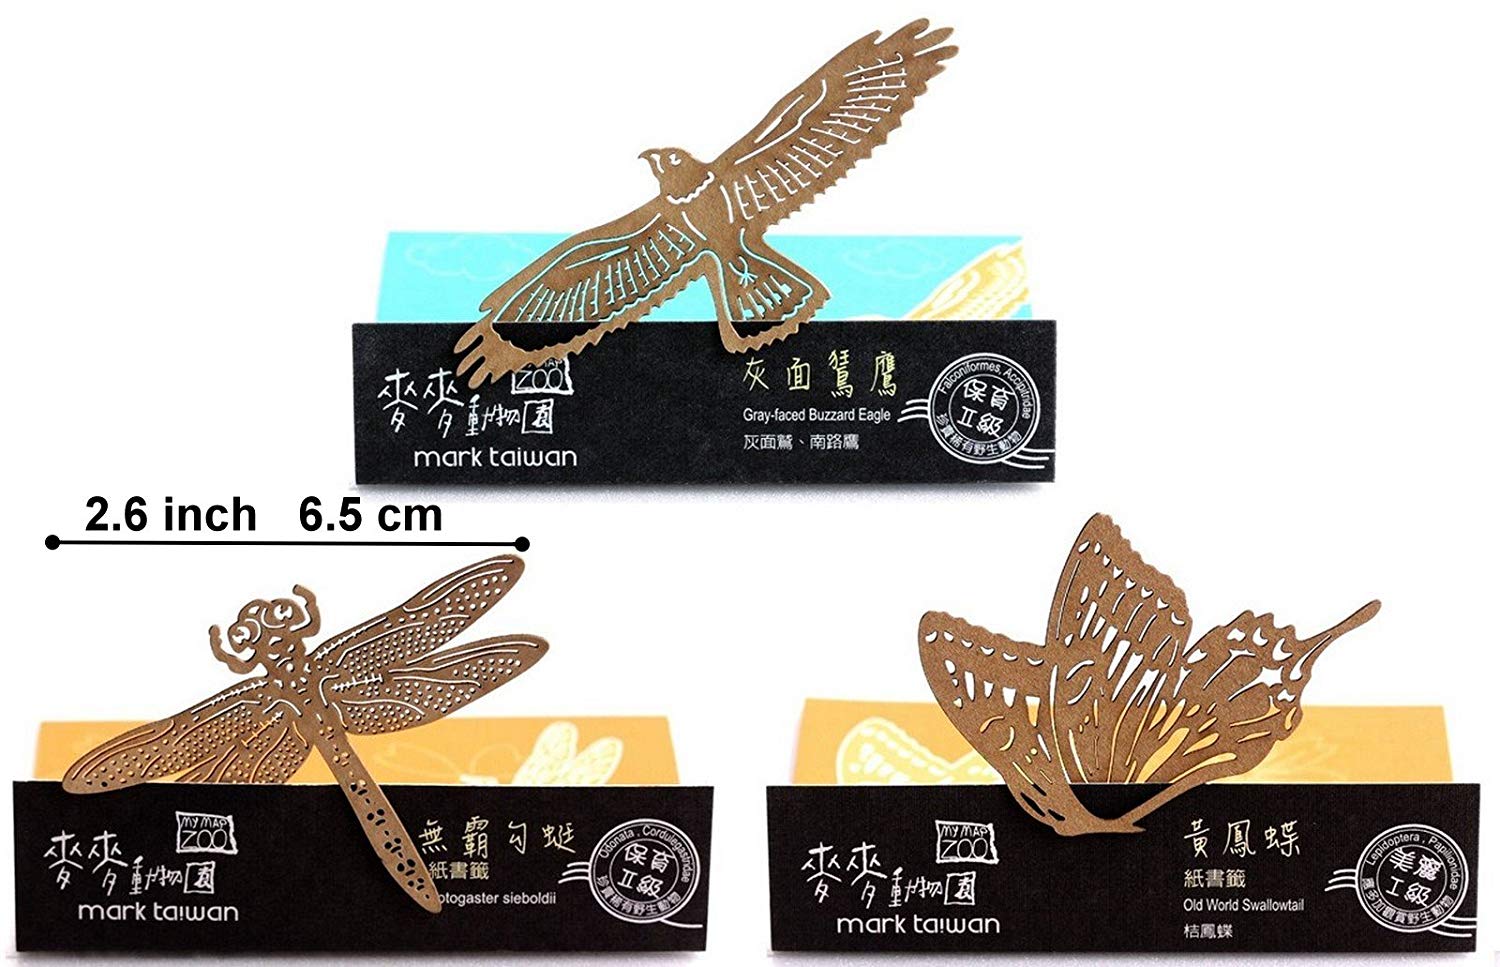 Flying Animals Logo - Amazon.com : Dosee Design mark taiwan paper cutting Flying Animals ...